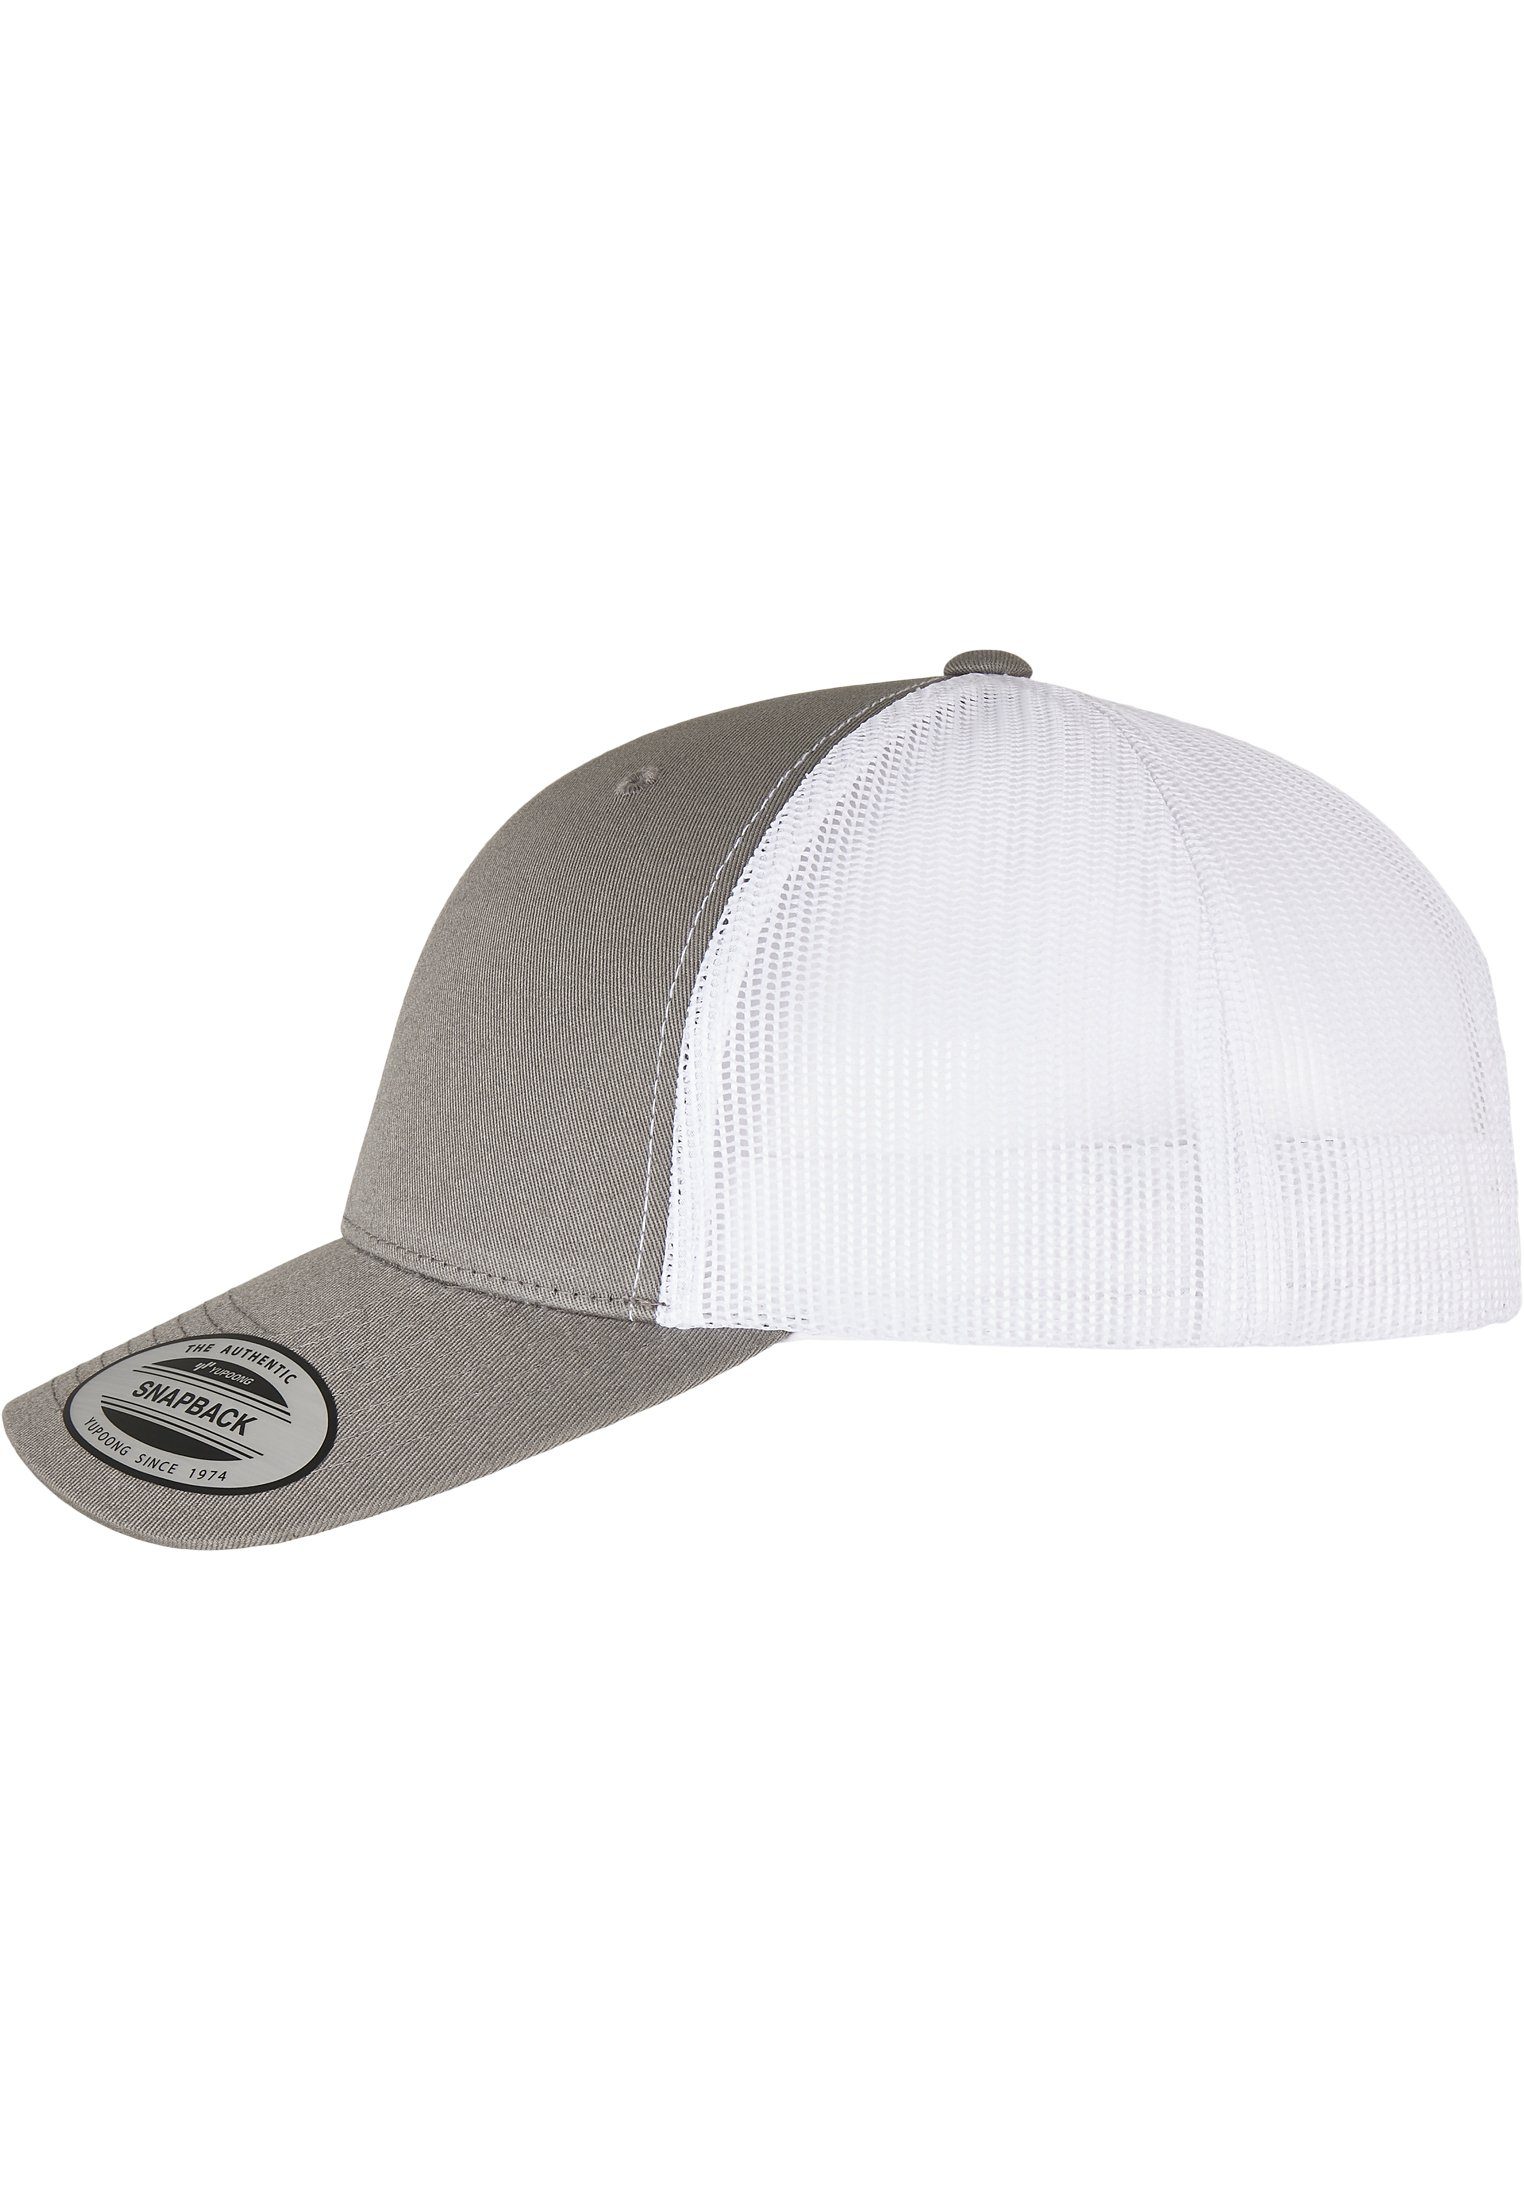 Flexfit CLASSICS Flex RECYCLED grey/white 2-TONE TRUCKER RETRO Cap CAP YP Caps